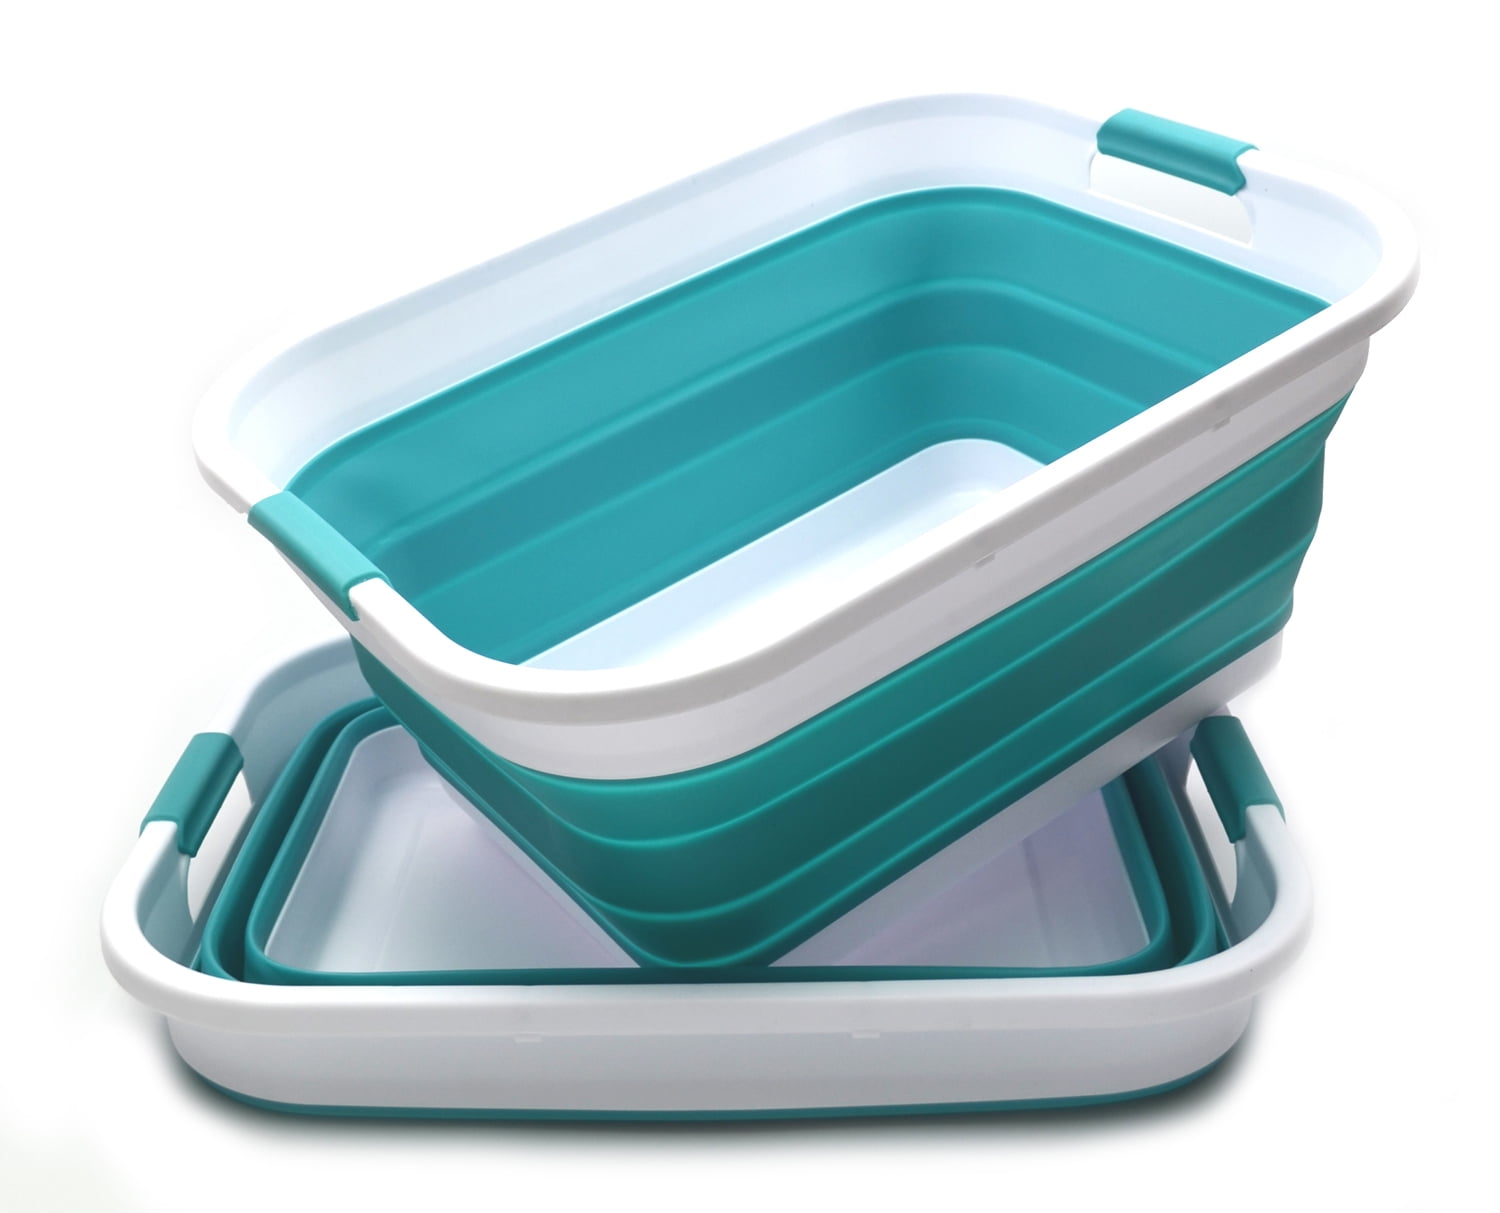 Square Tub//Basket Portable Washing Tub Space Saving Laundry Hamper Foldable Storage Container//Organizer Grey SAMMART Collapsible Plastic Laundry Basket